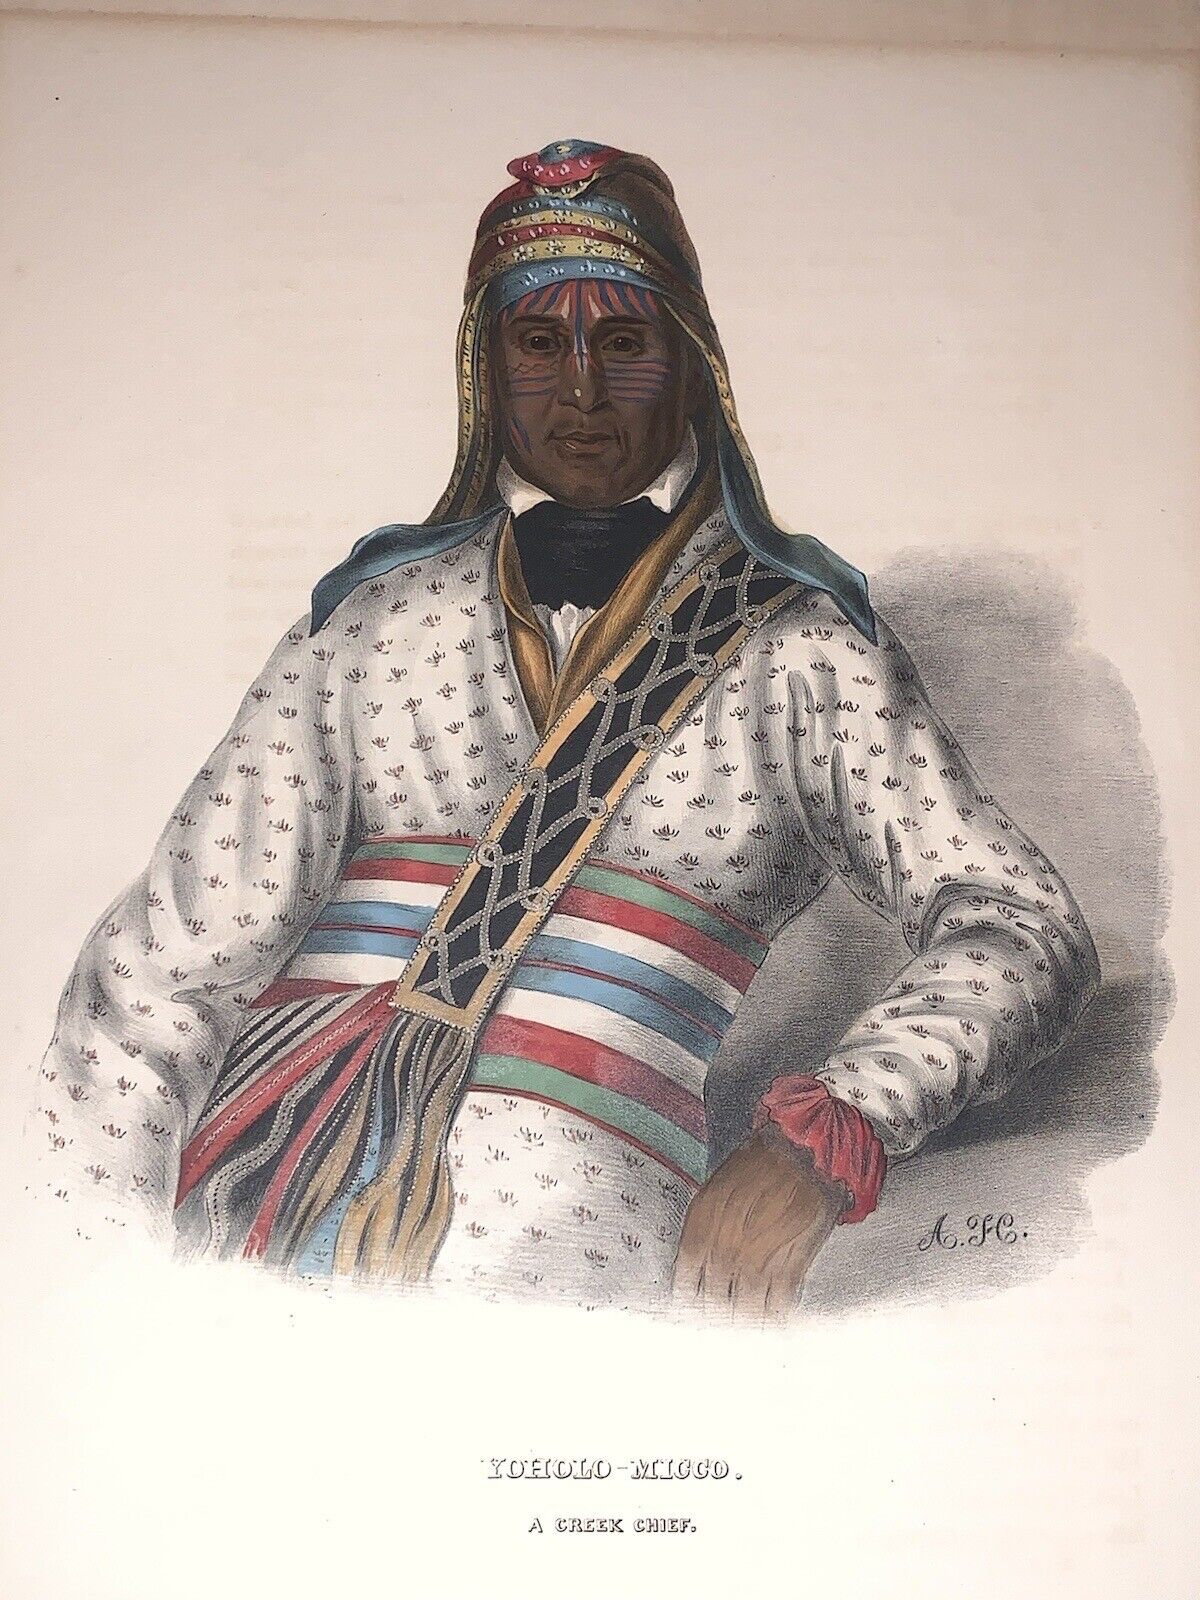 Yoholo Micco Antique Original Hand Color Print- McKenney & Hall Pl. 49, 1836-44